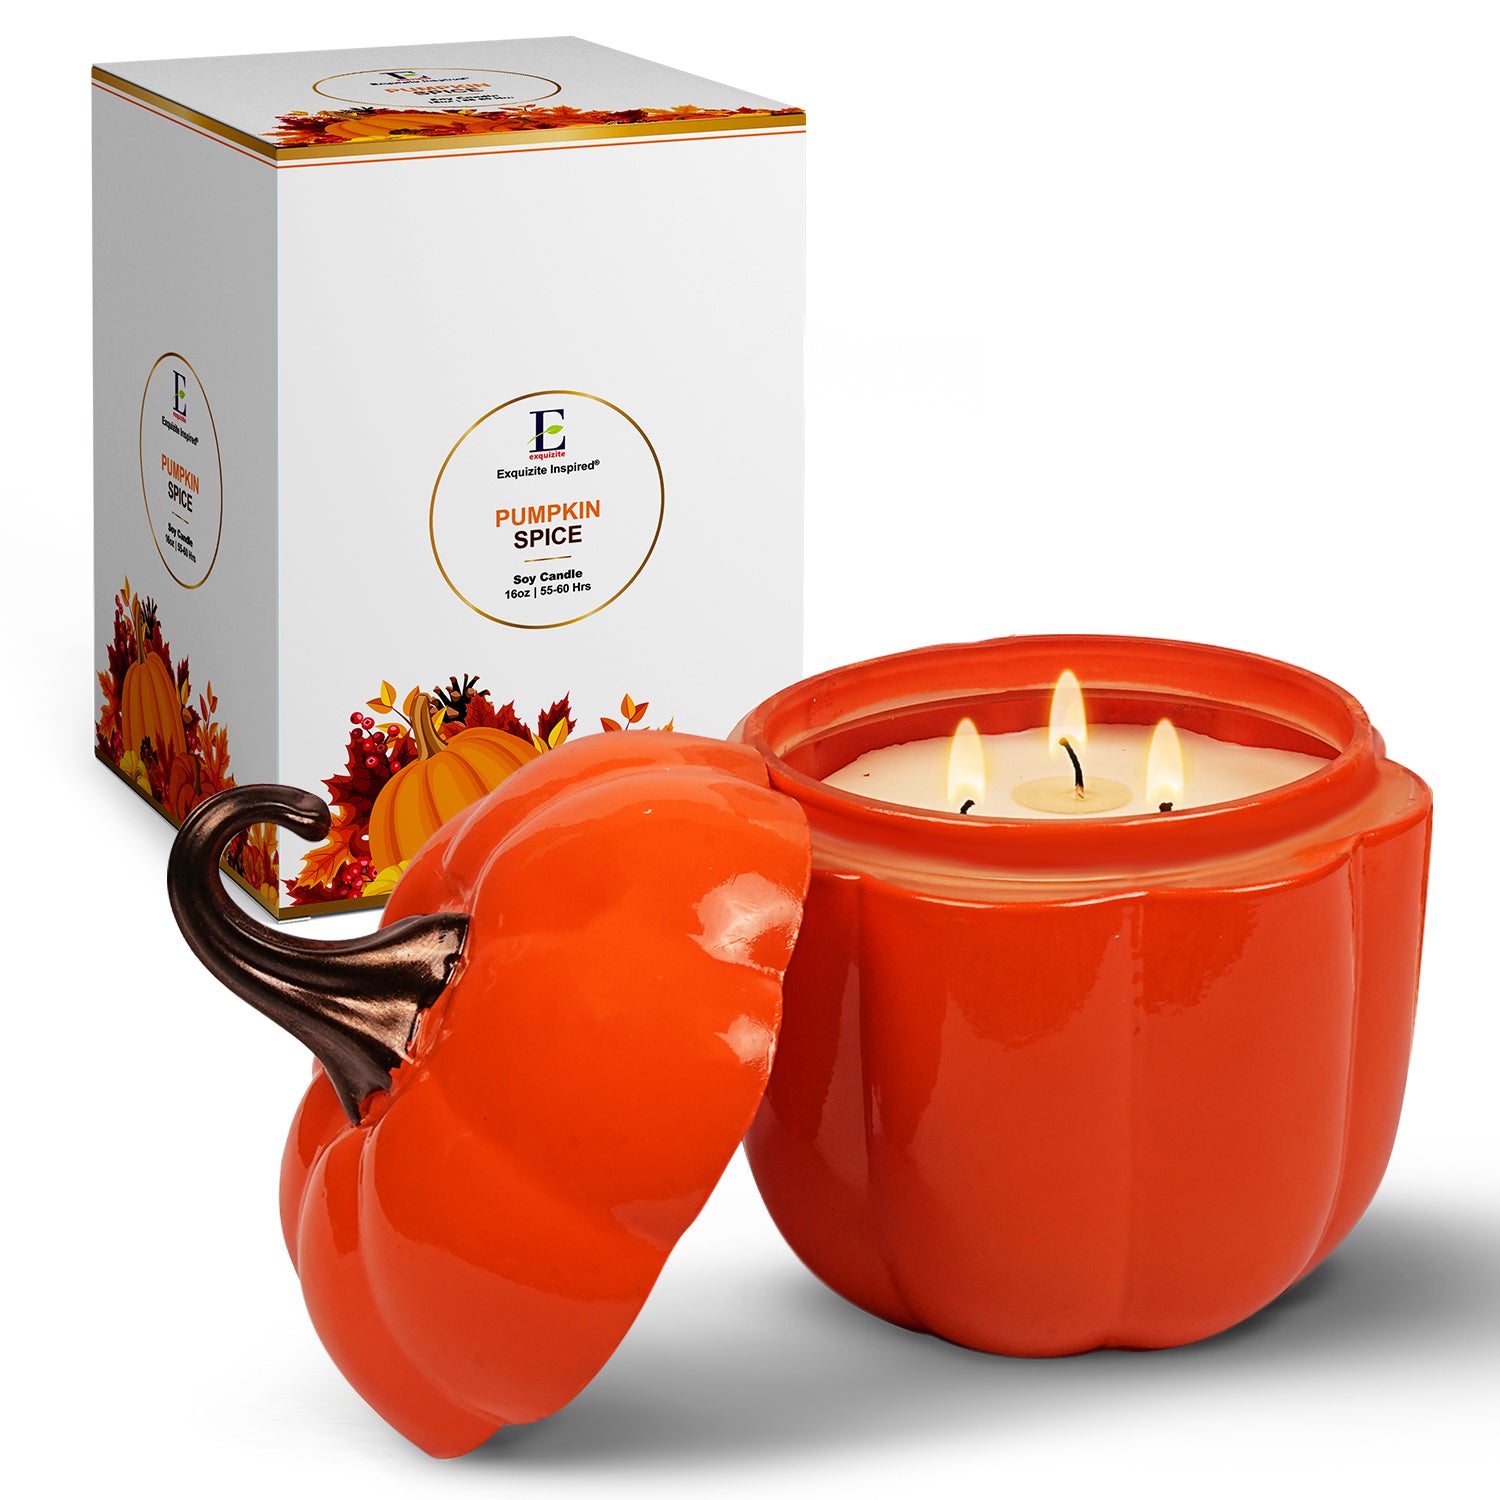 Pumpkin Spice Scented Jar Candles